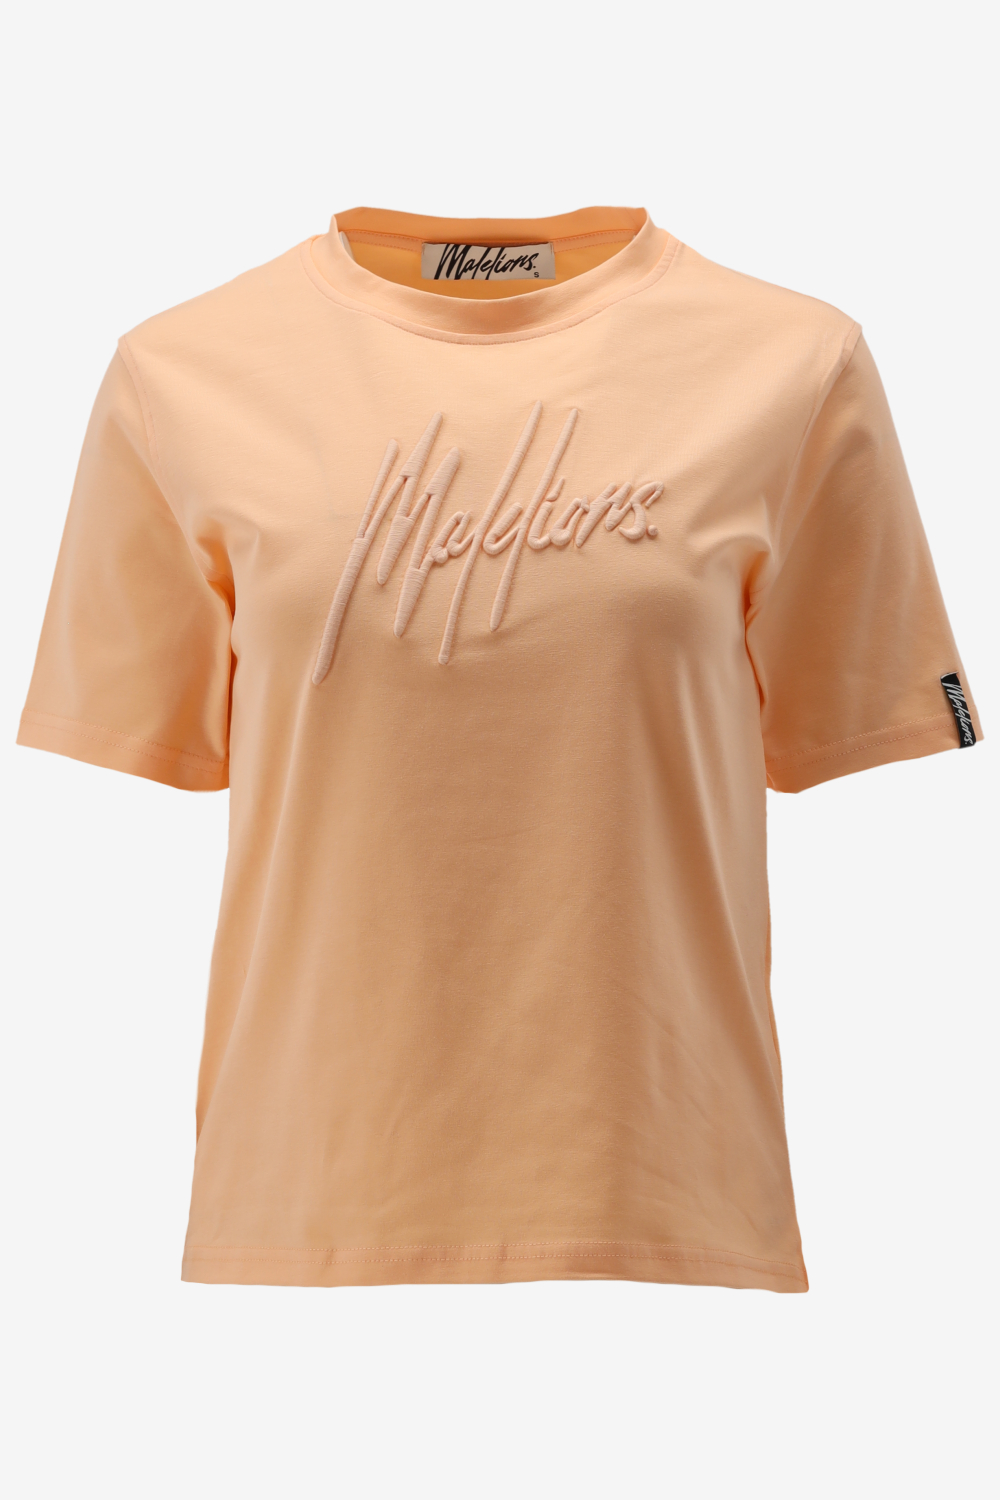 Malelions T-shirt 